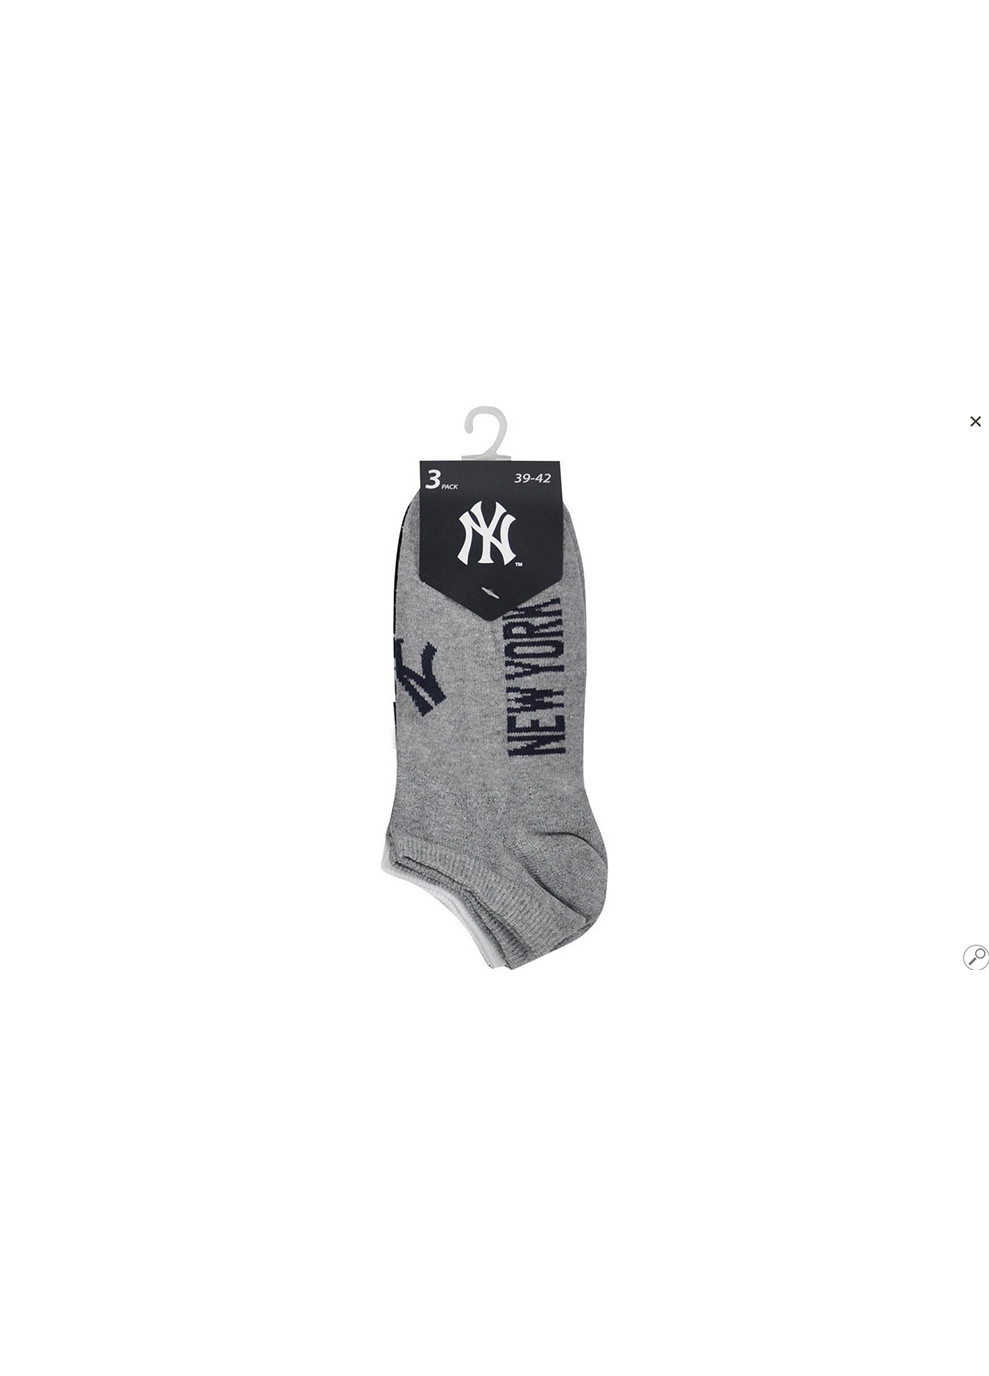 Шкарпетки Sneaker 3-pack 39-42 black/white/gray 15100004-1003 New York Yankees (253683786)